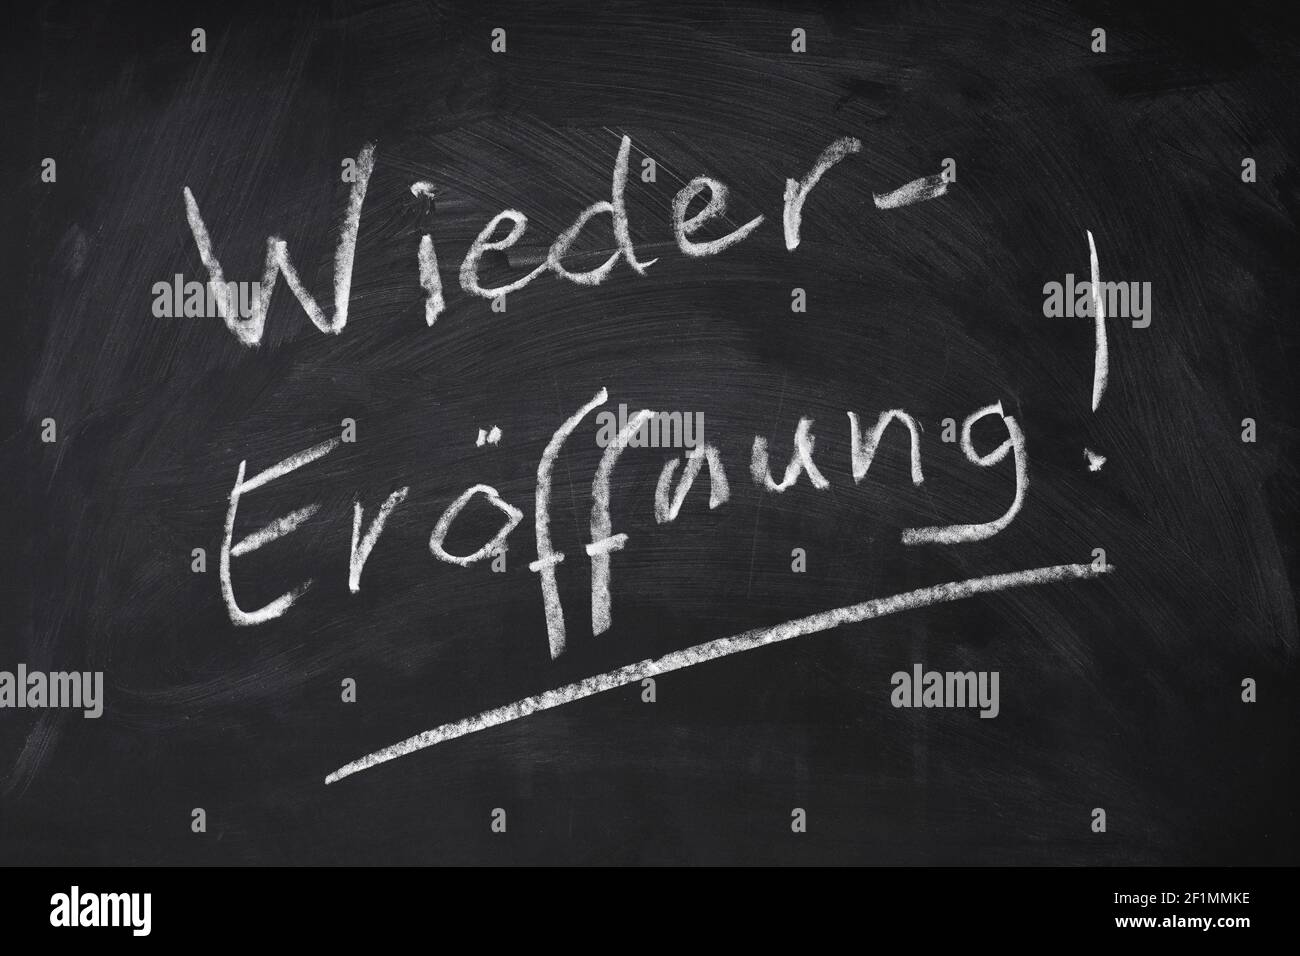 Wiedereröffnung means reopening in German - handwritten text on chalkboard sign Stock Photo